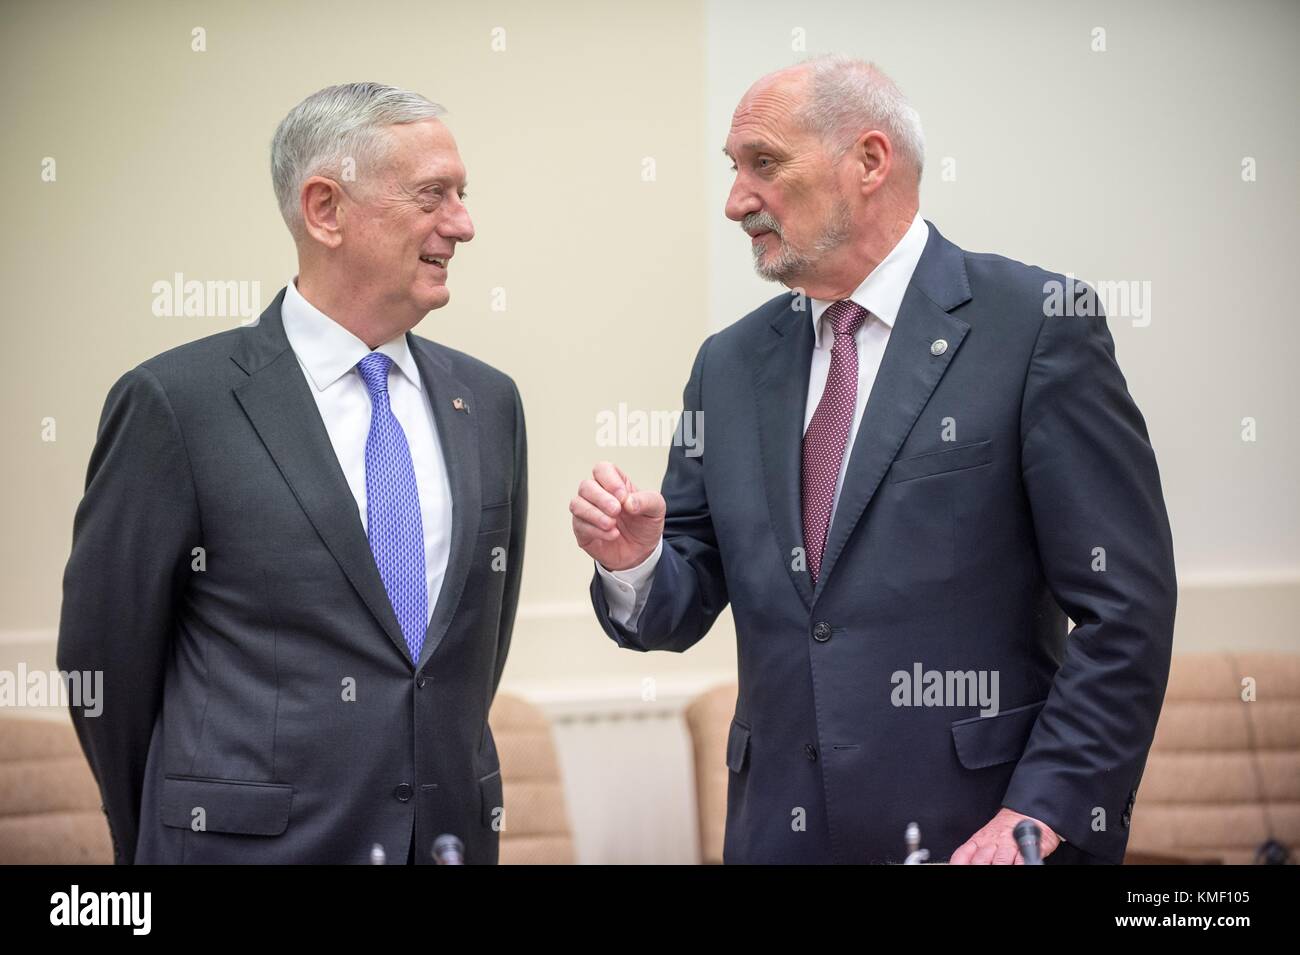 U.S. Defense Secretary James Mattis (left) speaks with Polish Defense Minister Antoni Macierewicz before a meeting at the NATO Headquarters June 29, 2017 in Brussels, Belgium. (photo by Jette Carr  via Planetpix) Stock Photo